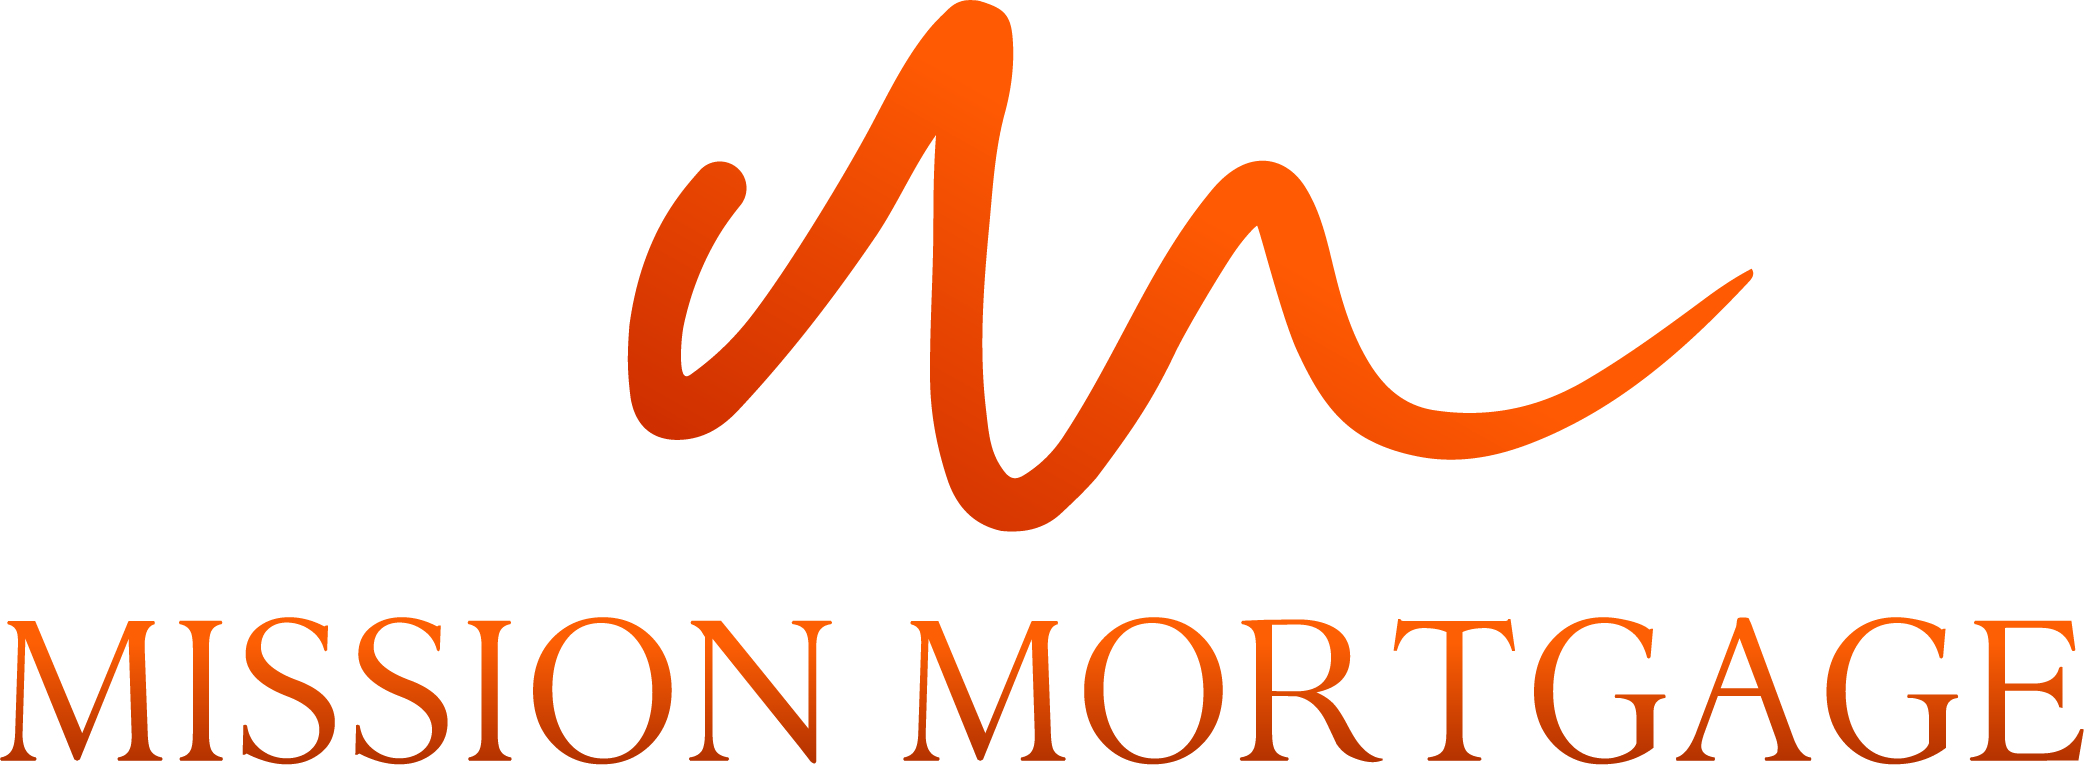 missionmortgage-logo.jpg